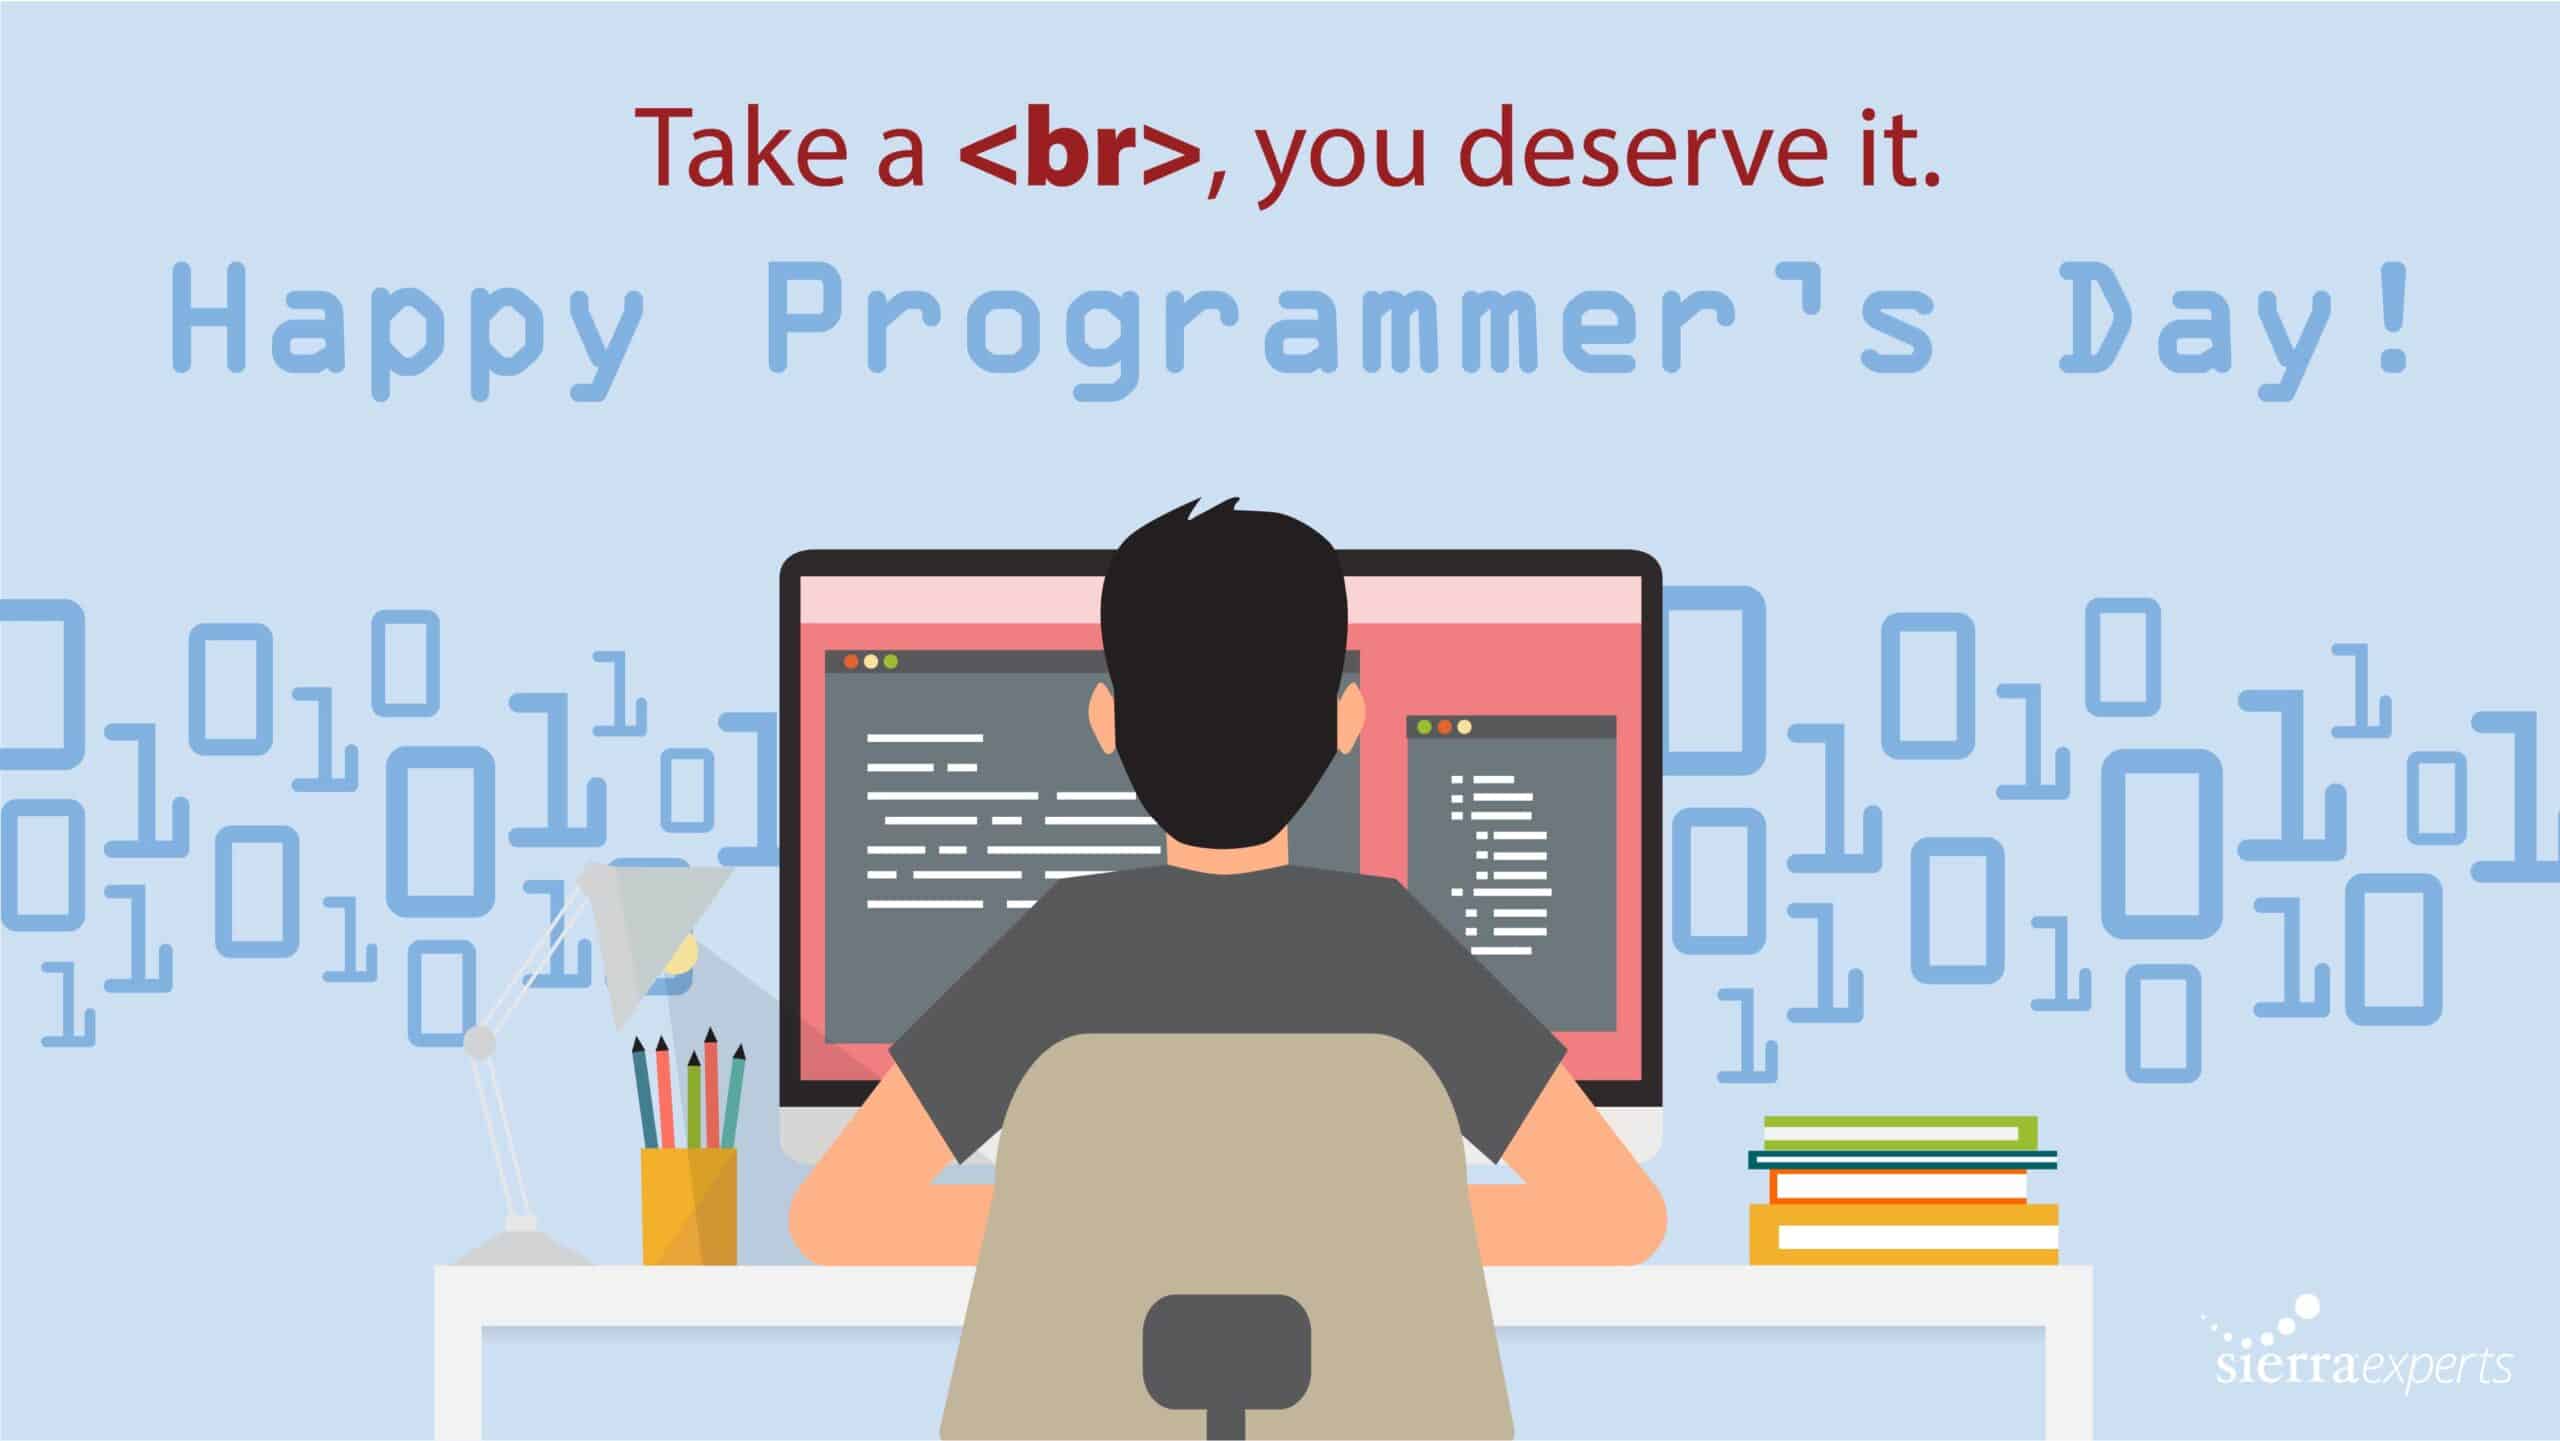 Happy International Programmers Day!